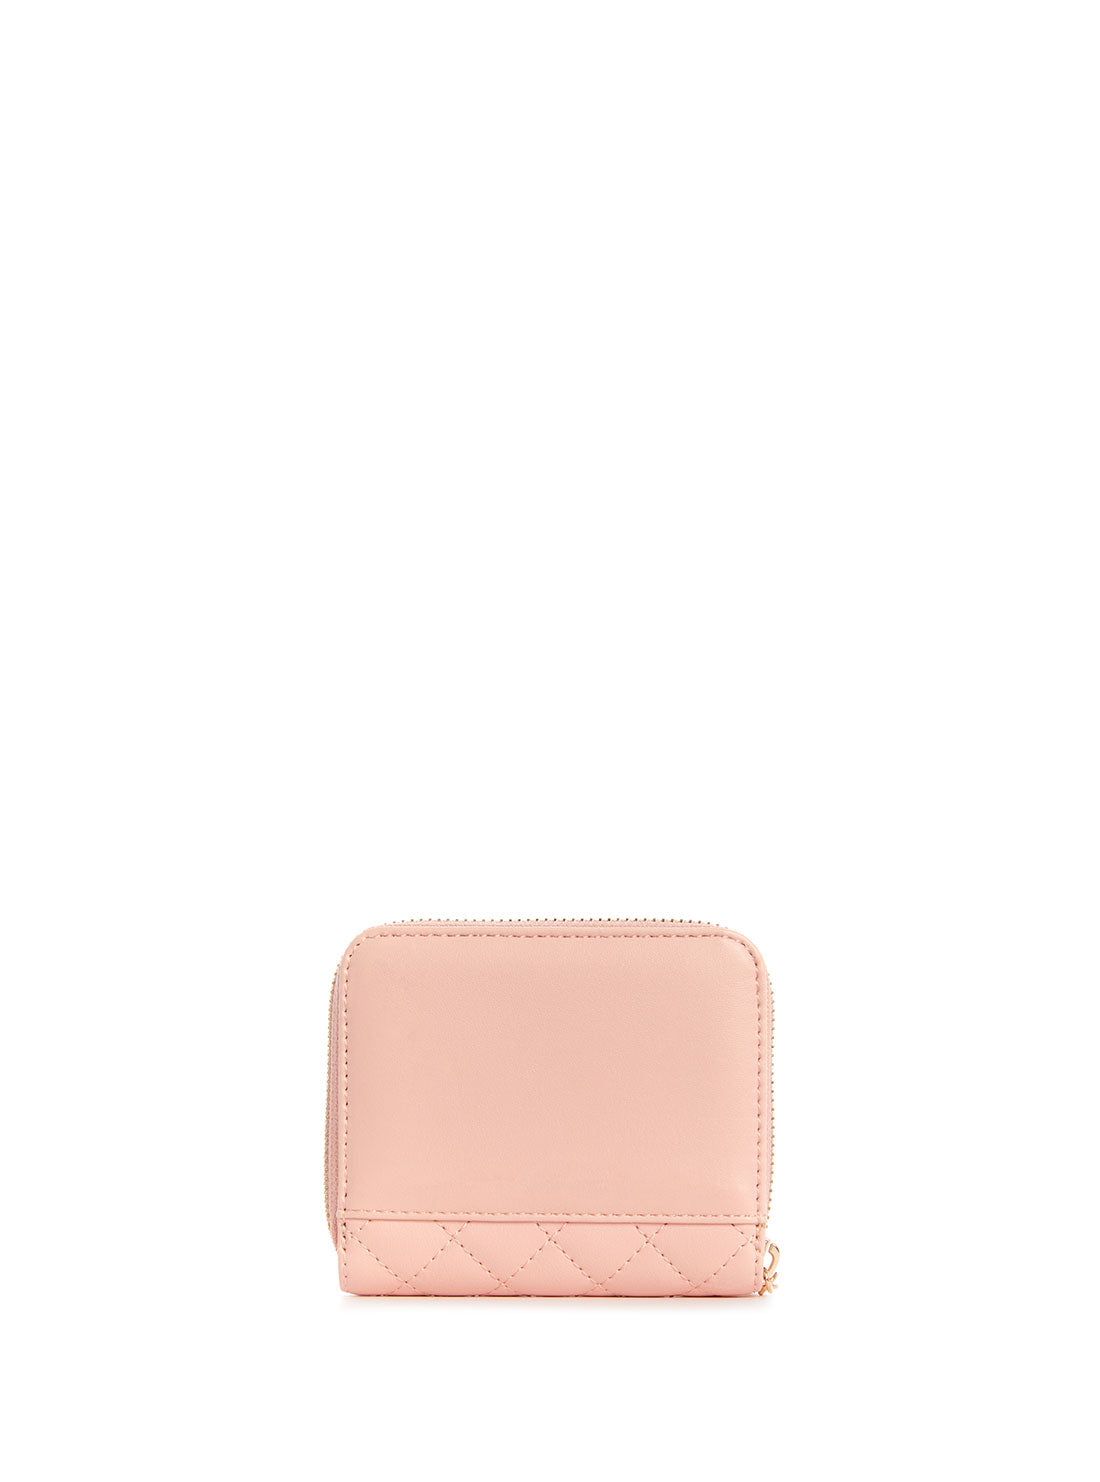 Peach Rue Rose Small Wallet